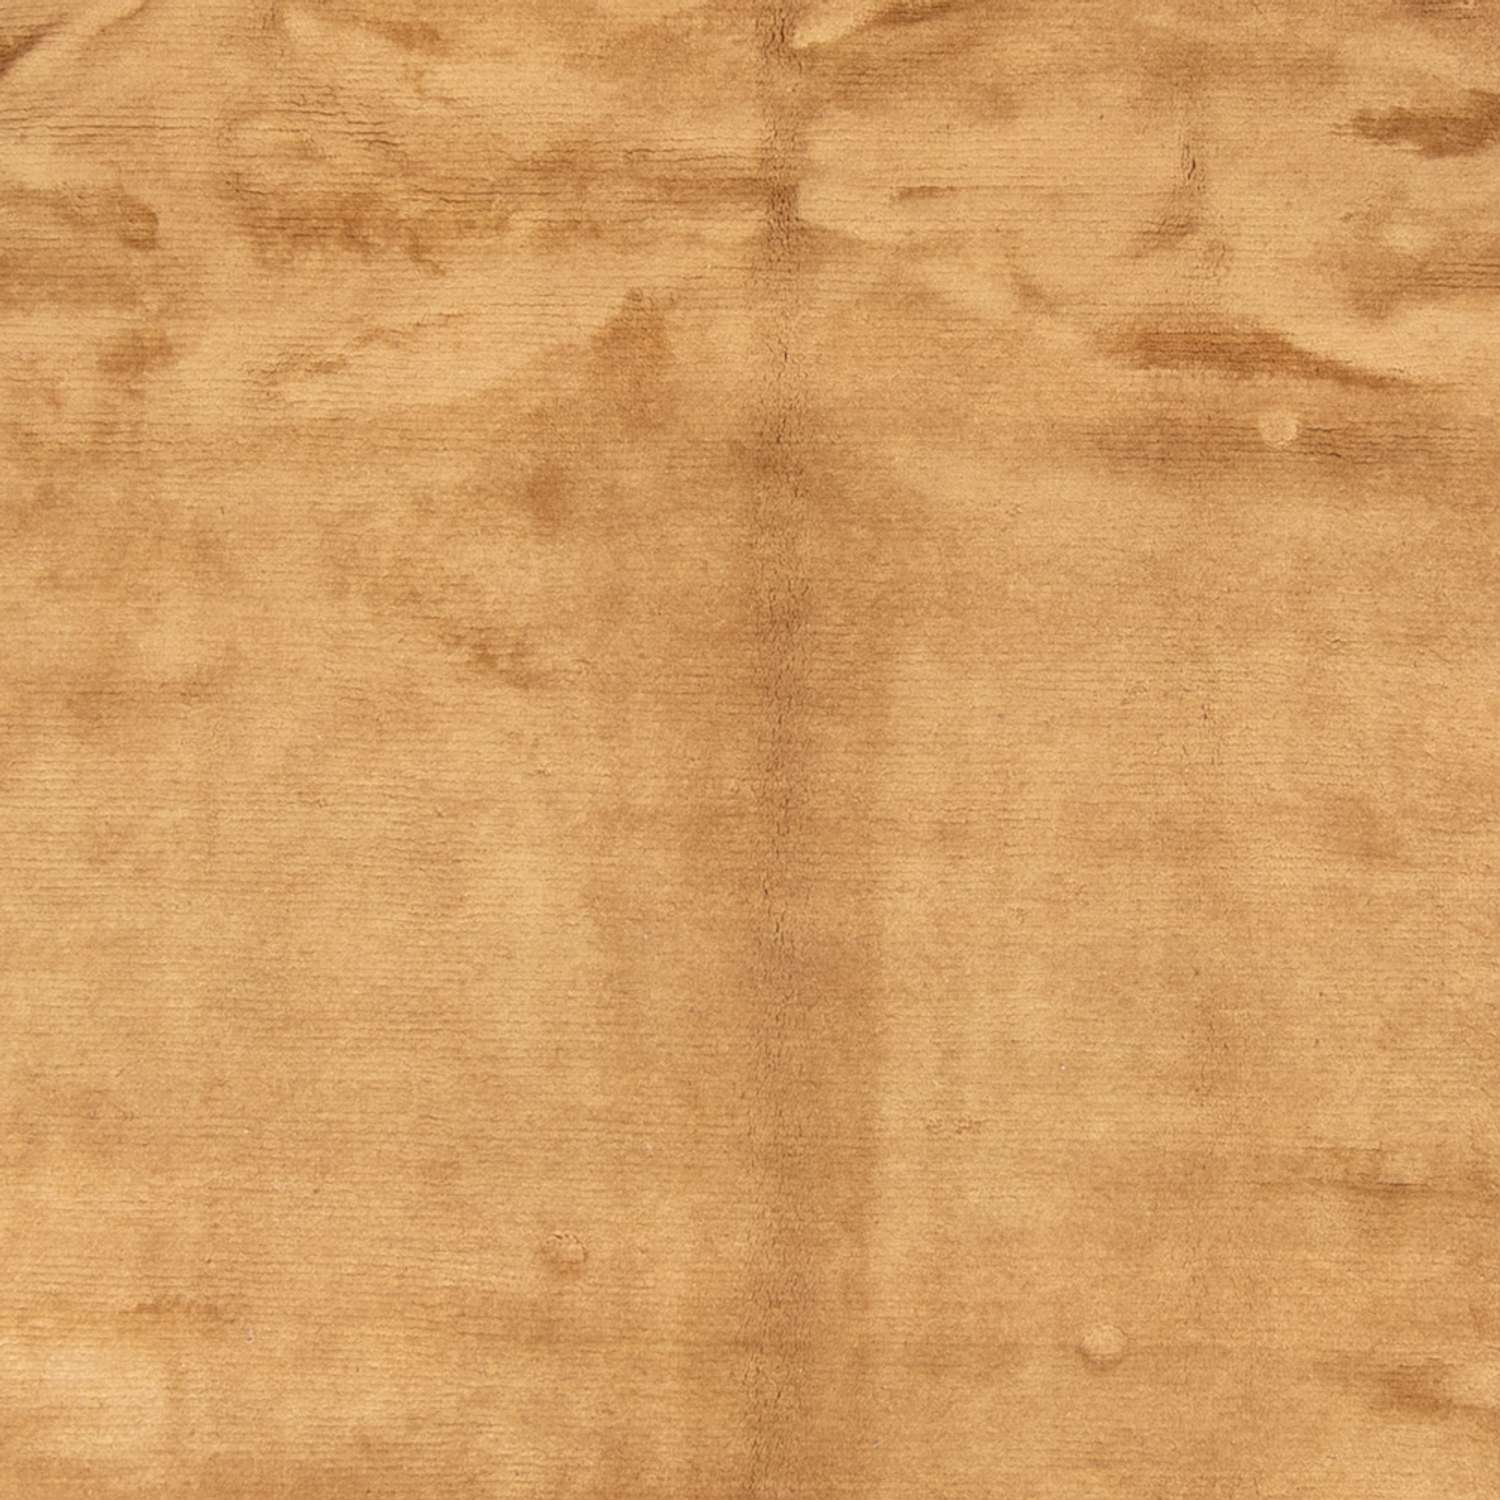 Nepal Rug - 338 x 253 cm - beige